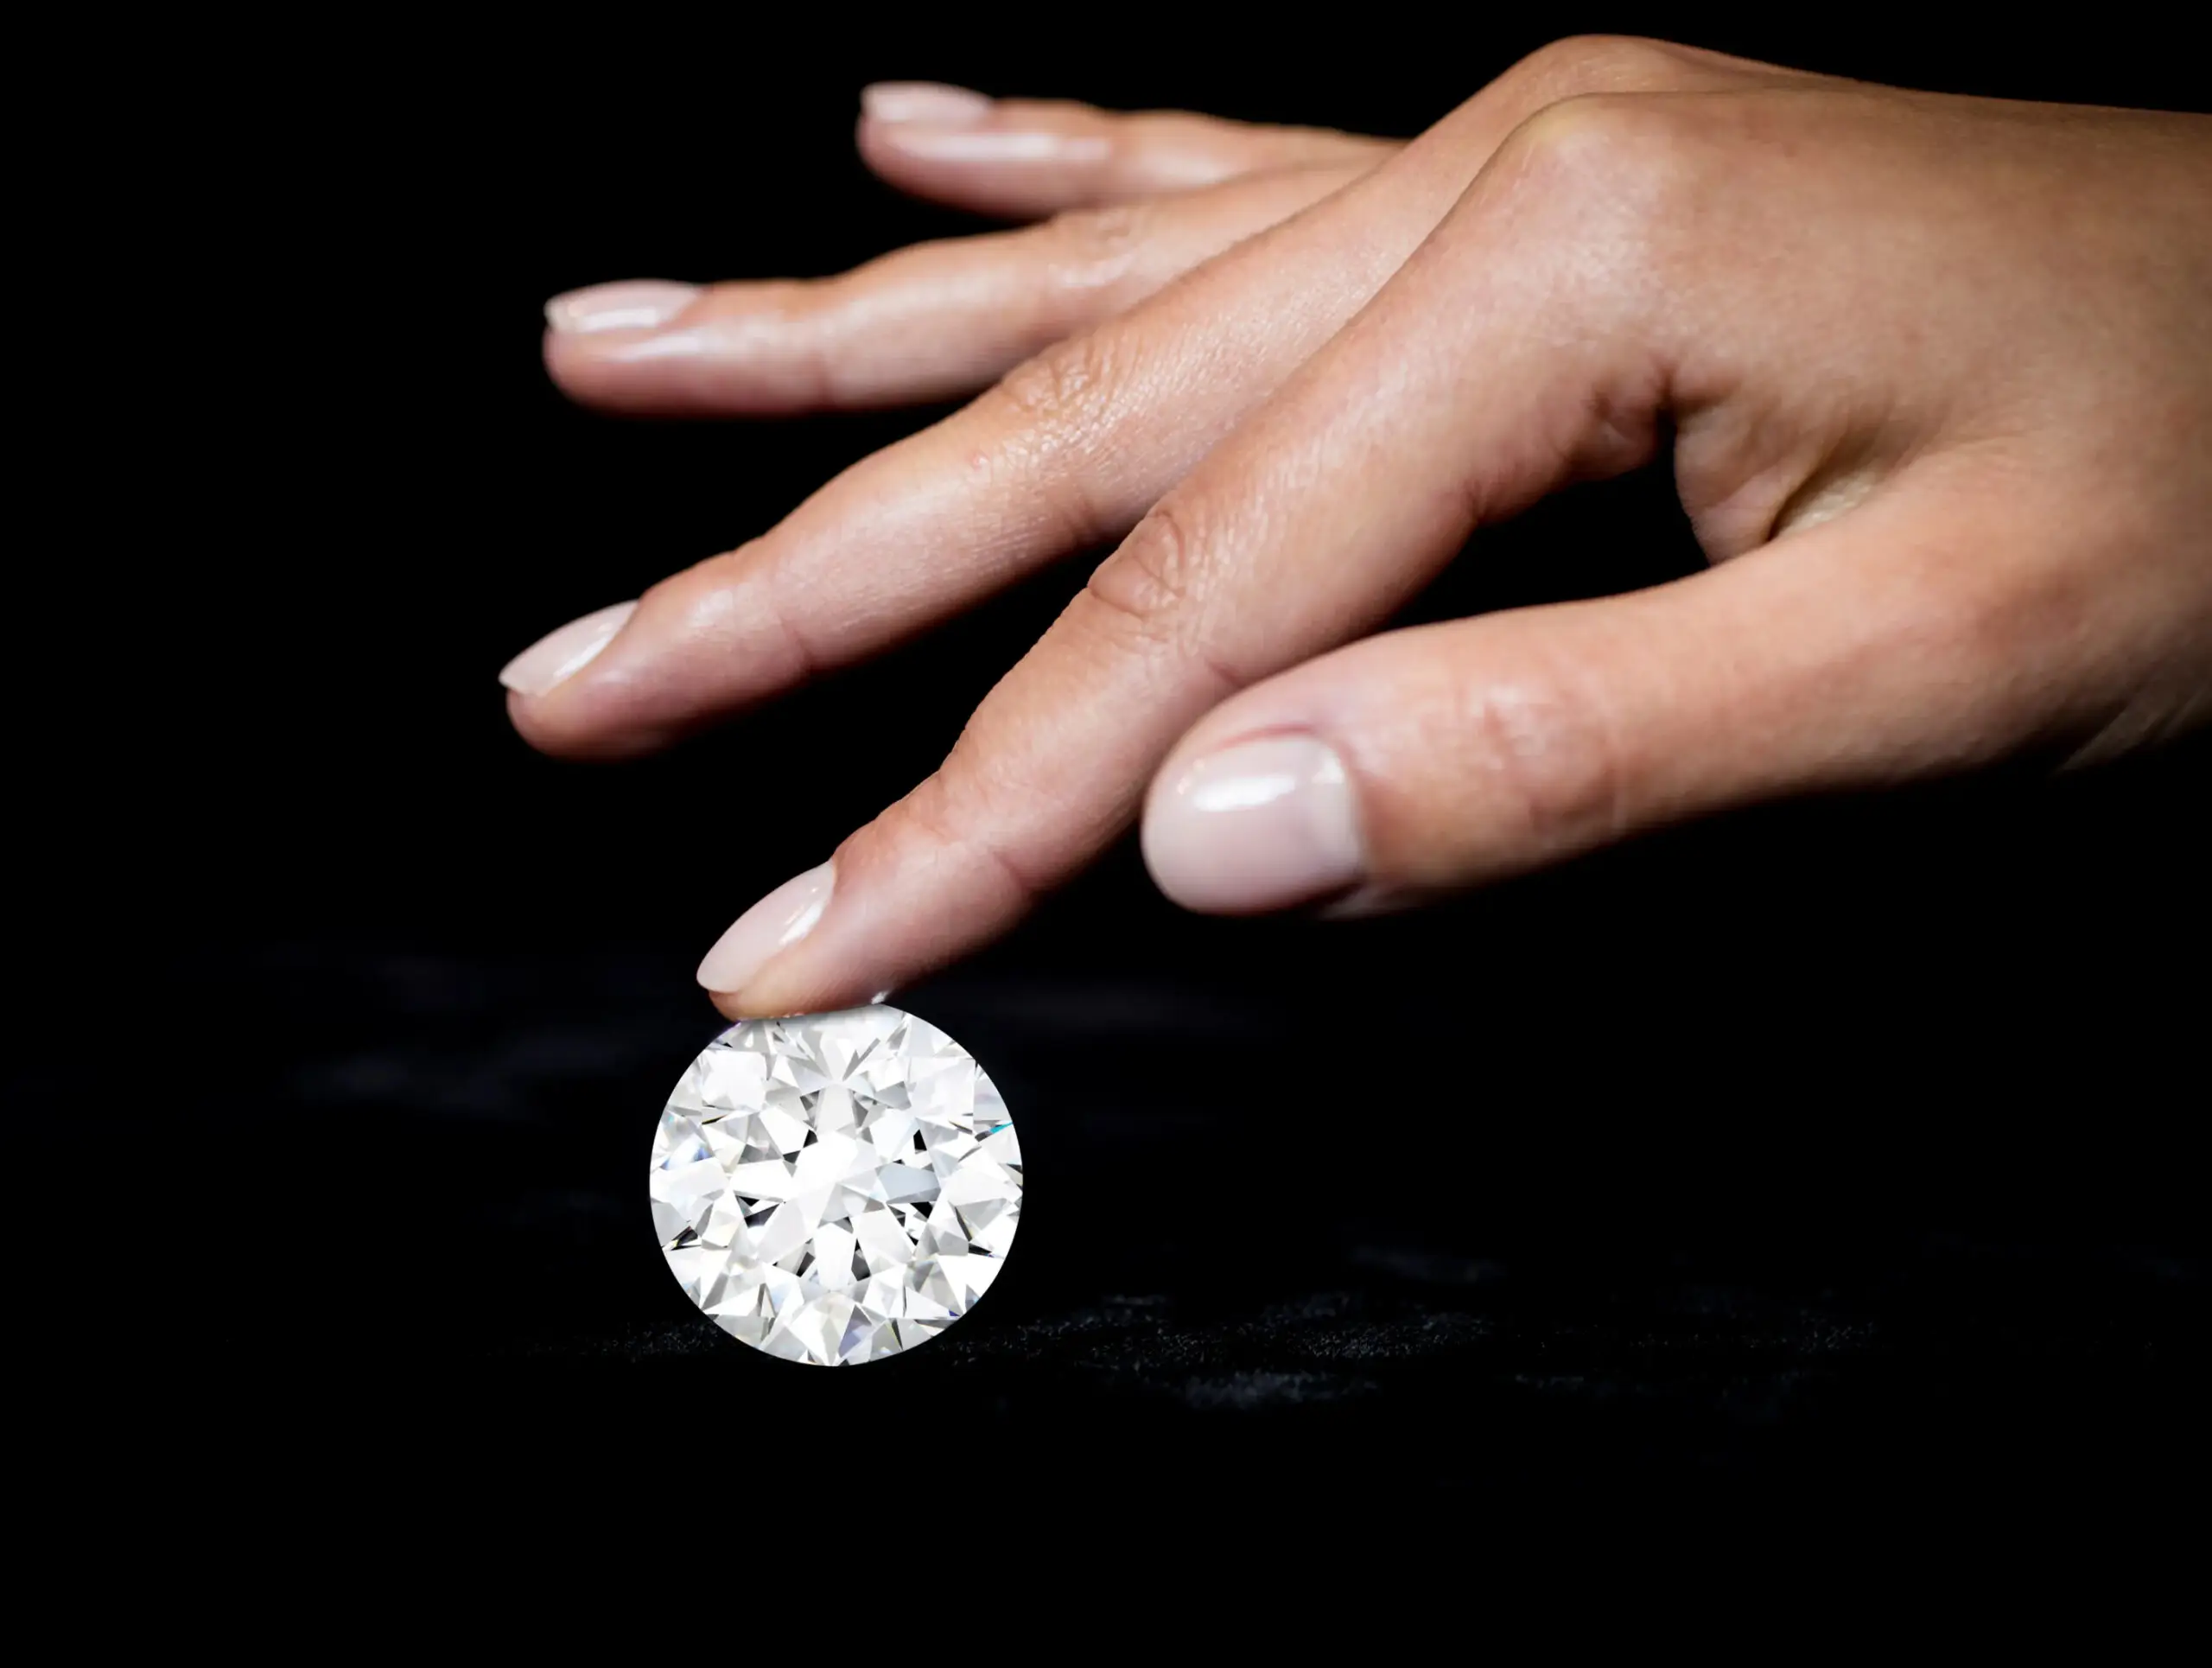 VVS1 Clarity Diamond: is it really worth the money?